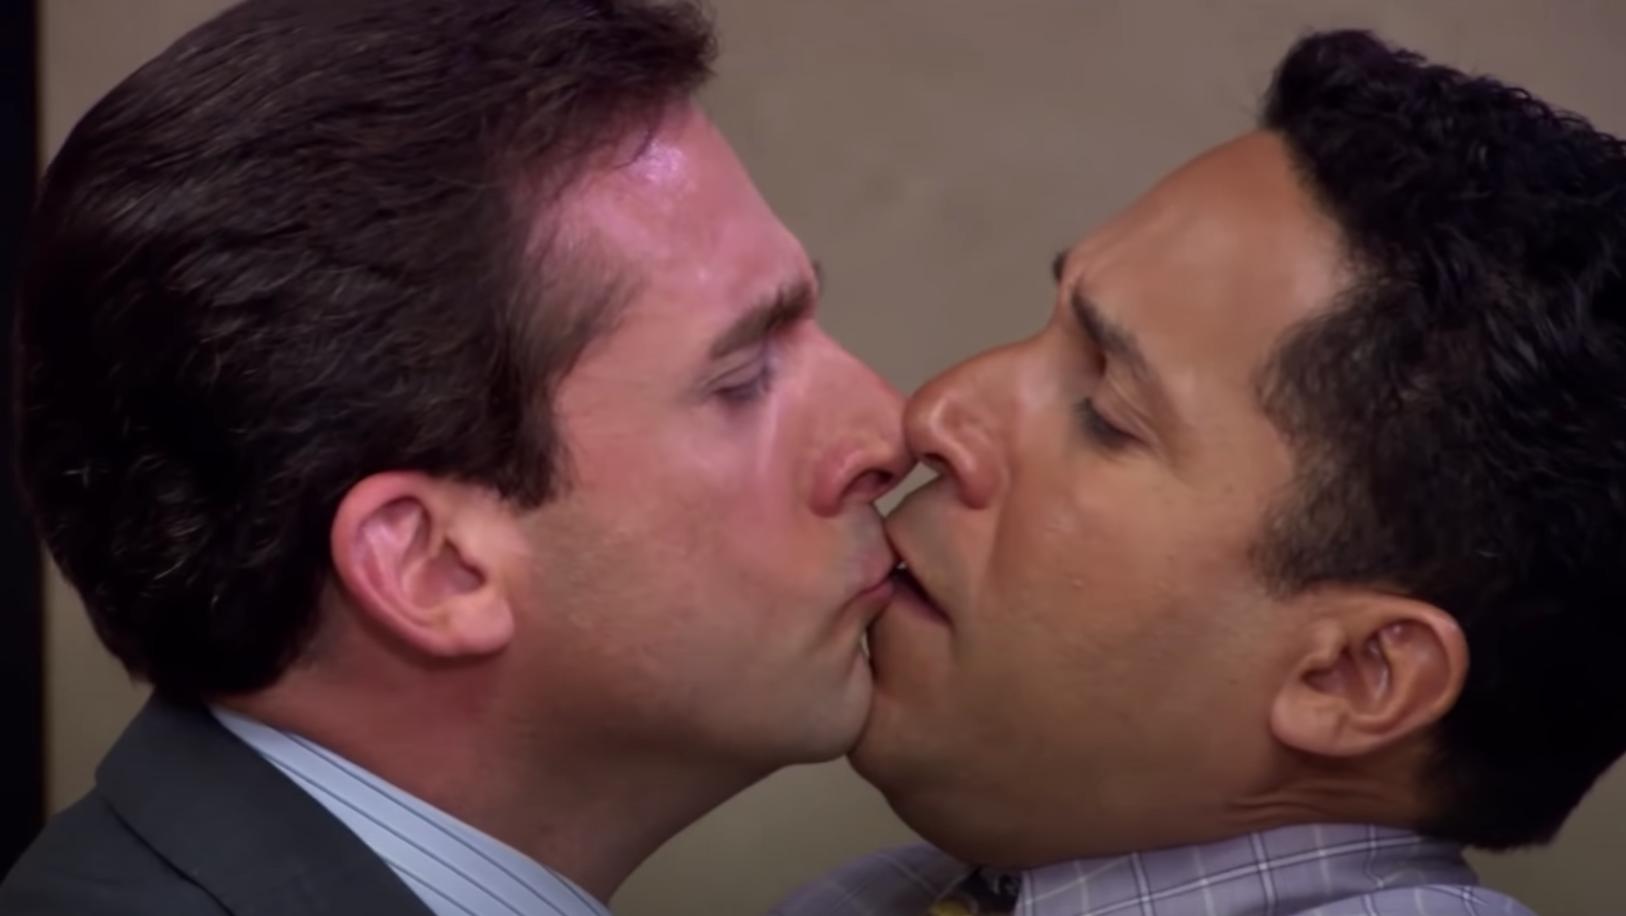 Michael and Oscar awkwardly kissing